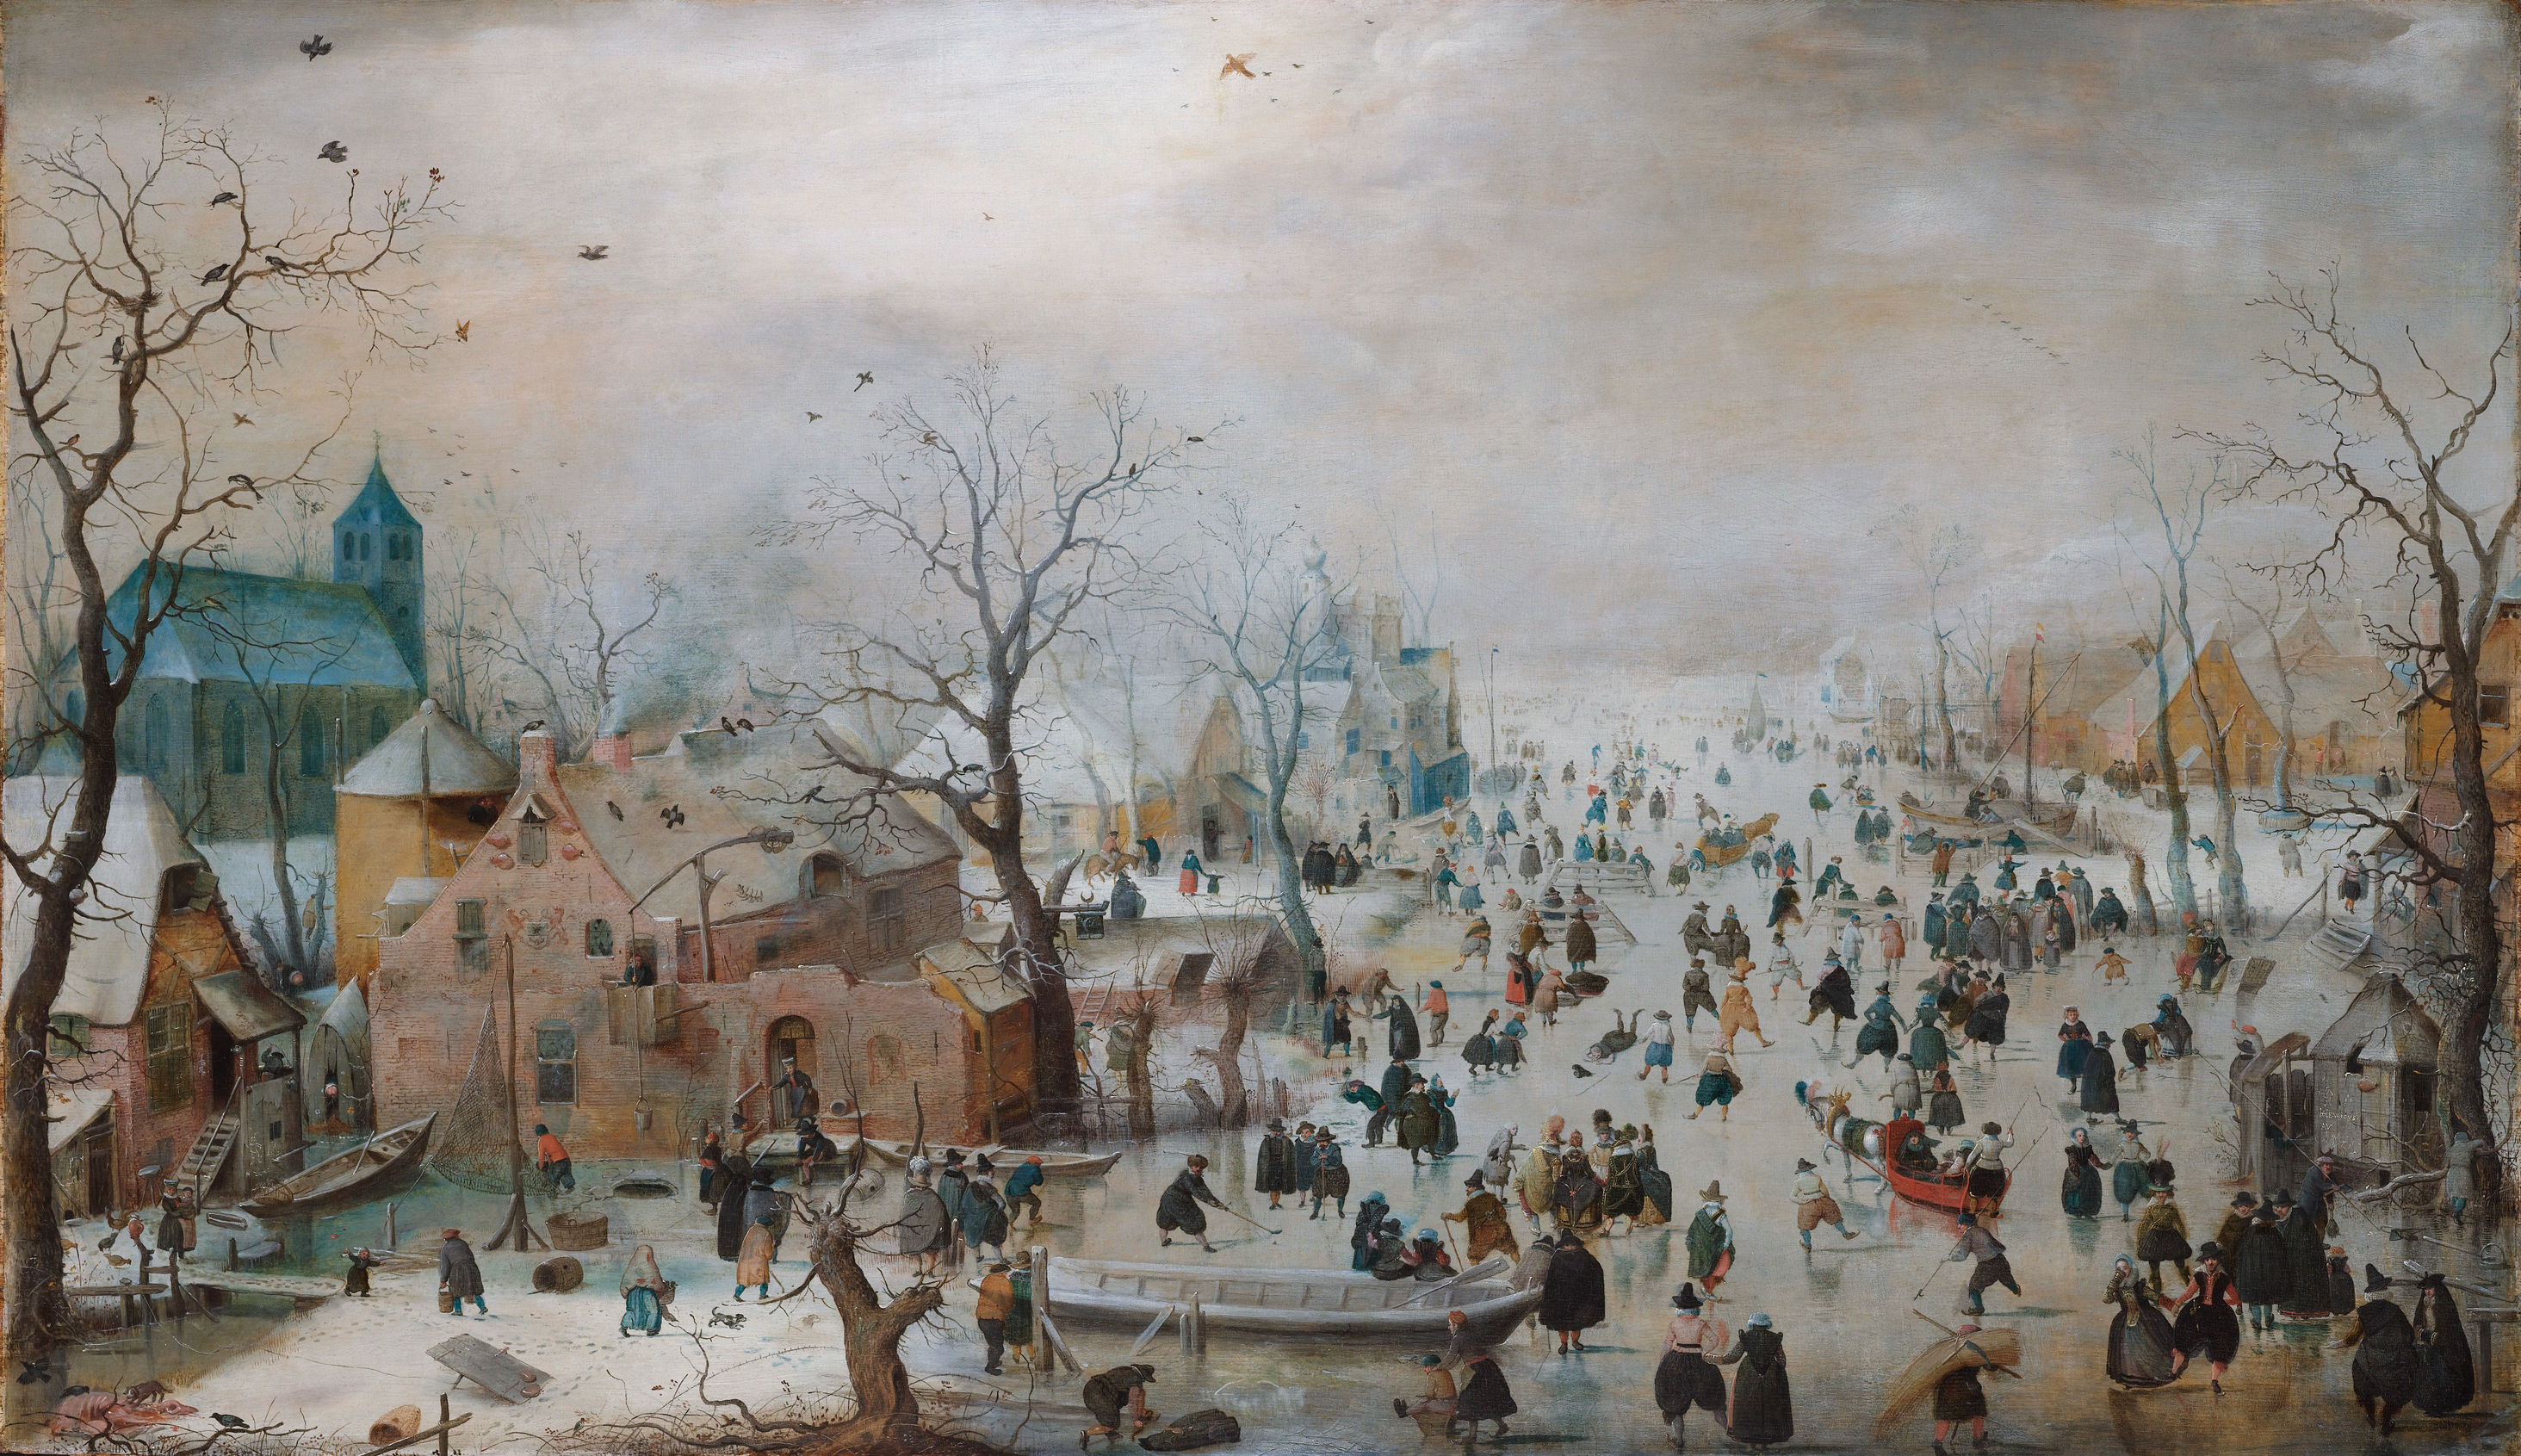 Patinagem no gelo by Hendrick Avercamp - 1615 